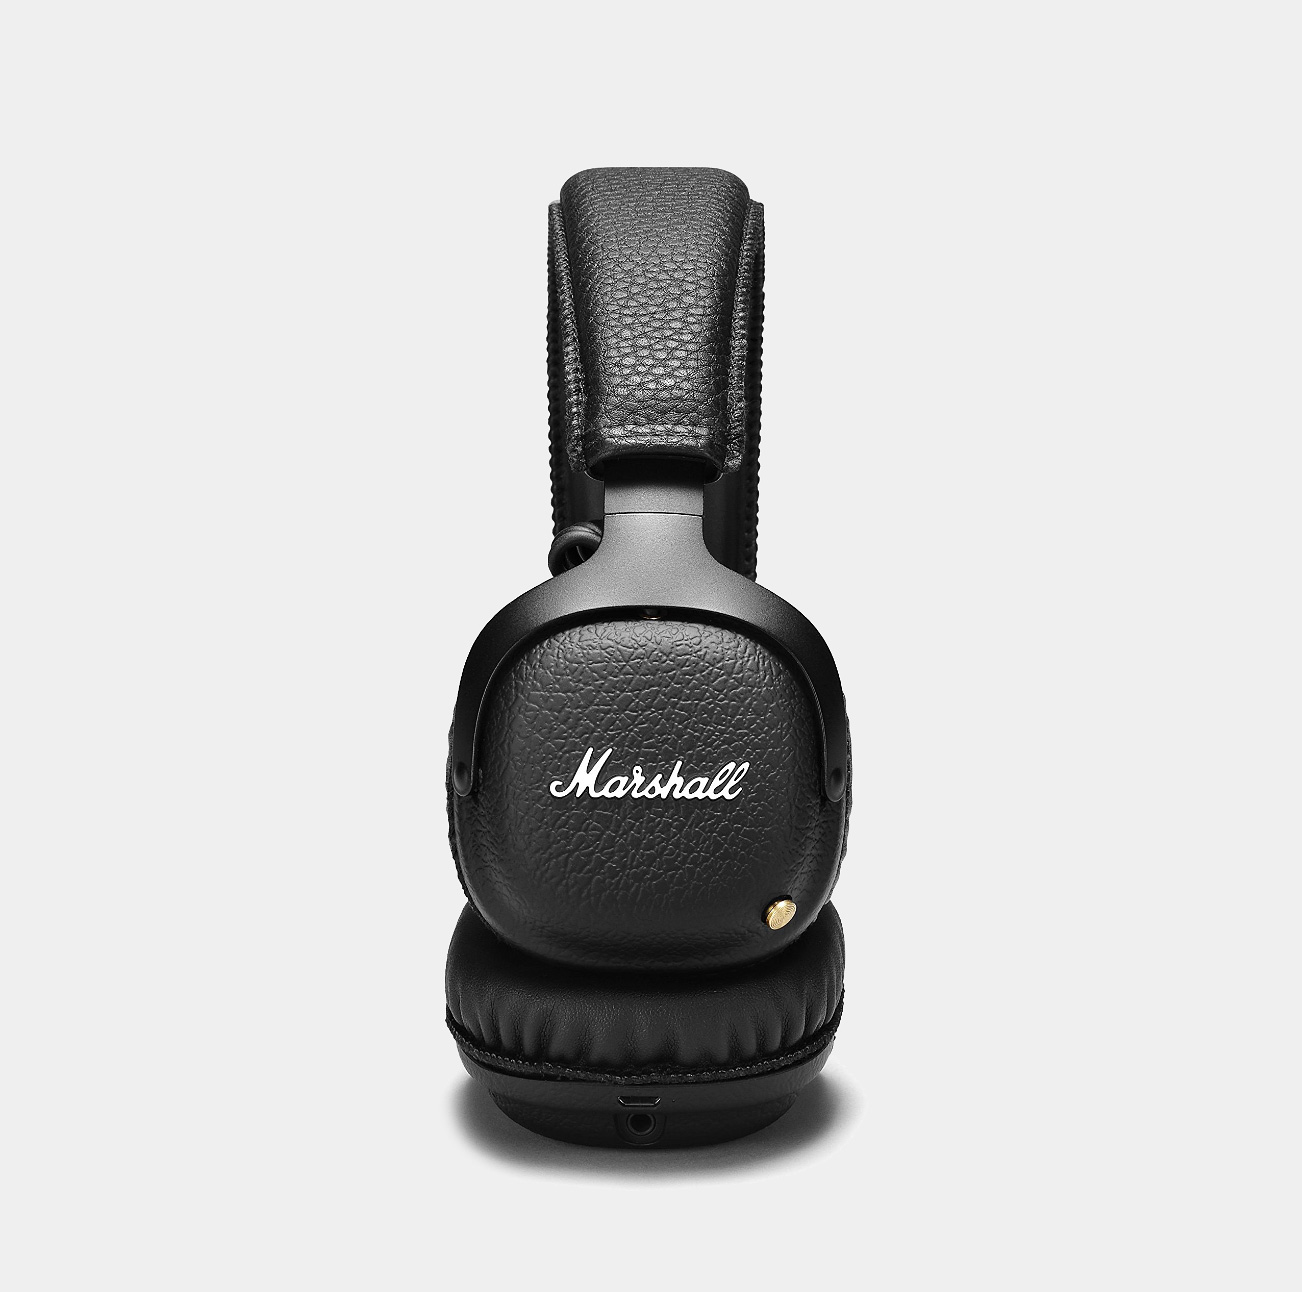 Marshall Mid Bluetooth Headphones Review 2020 | OPUMO Magazine